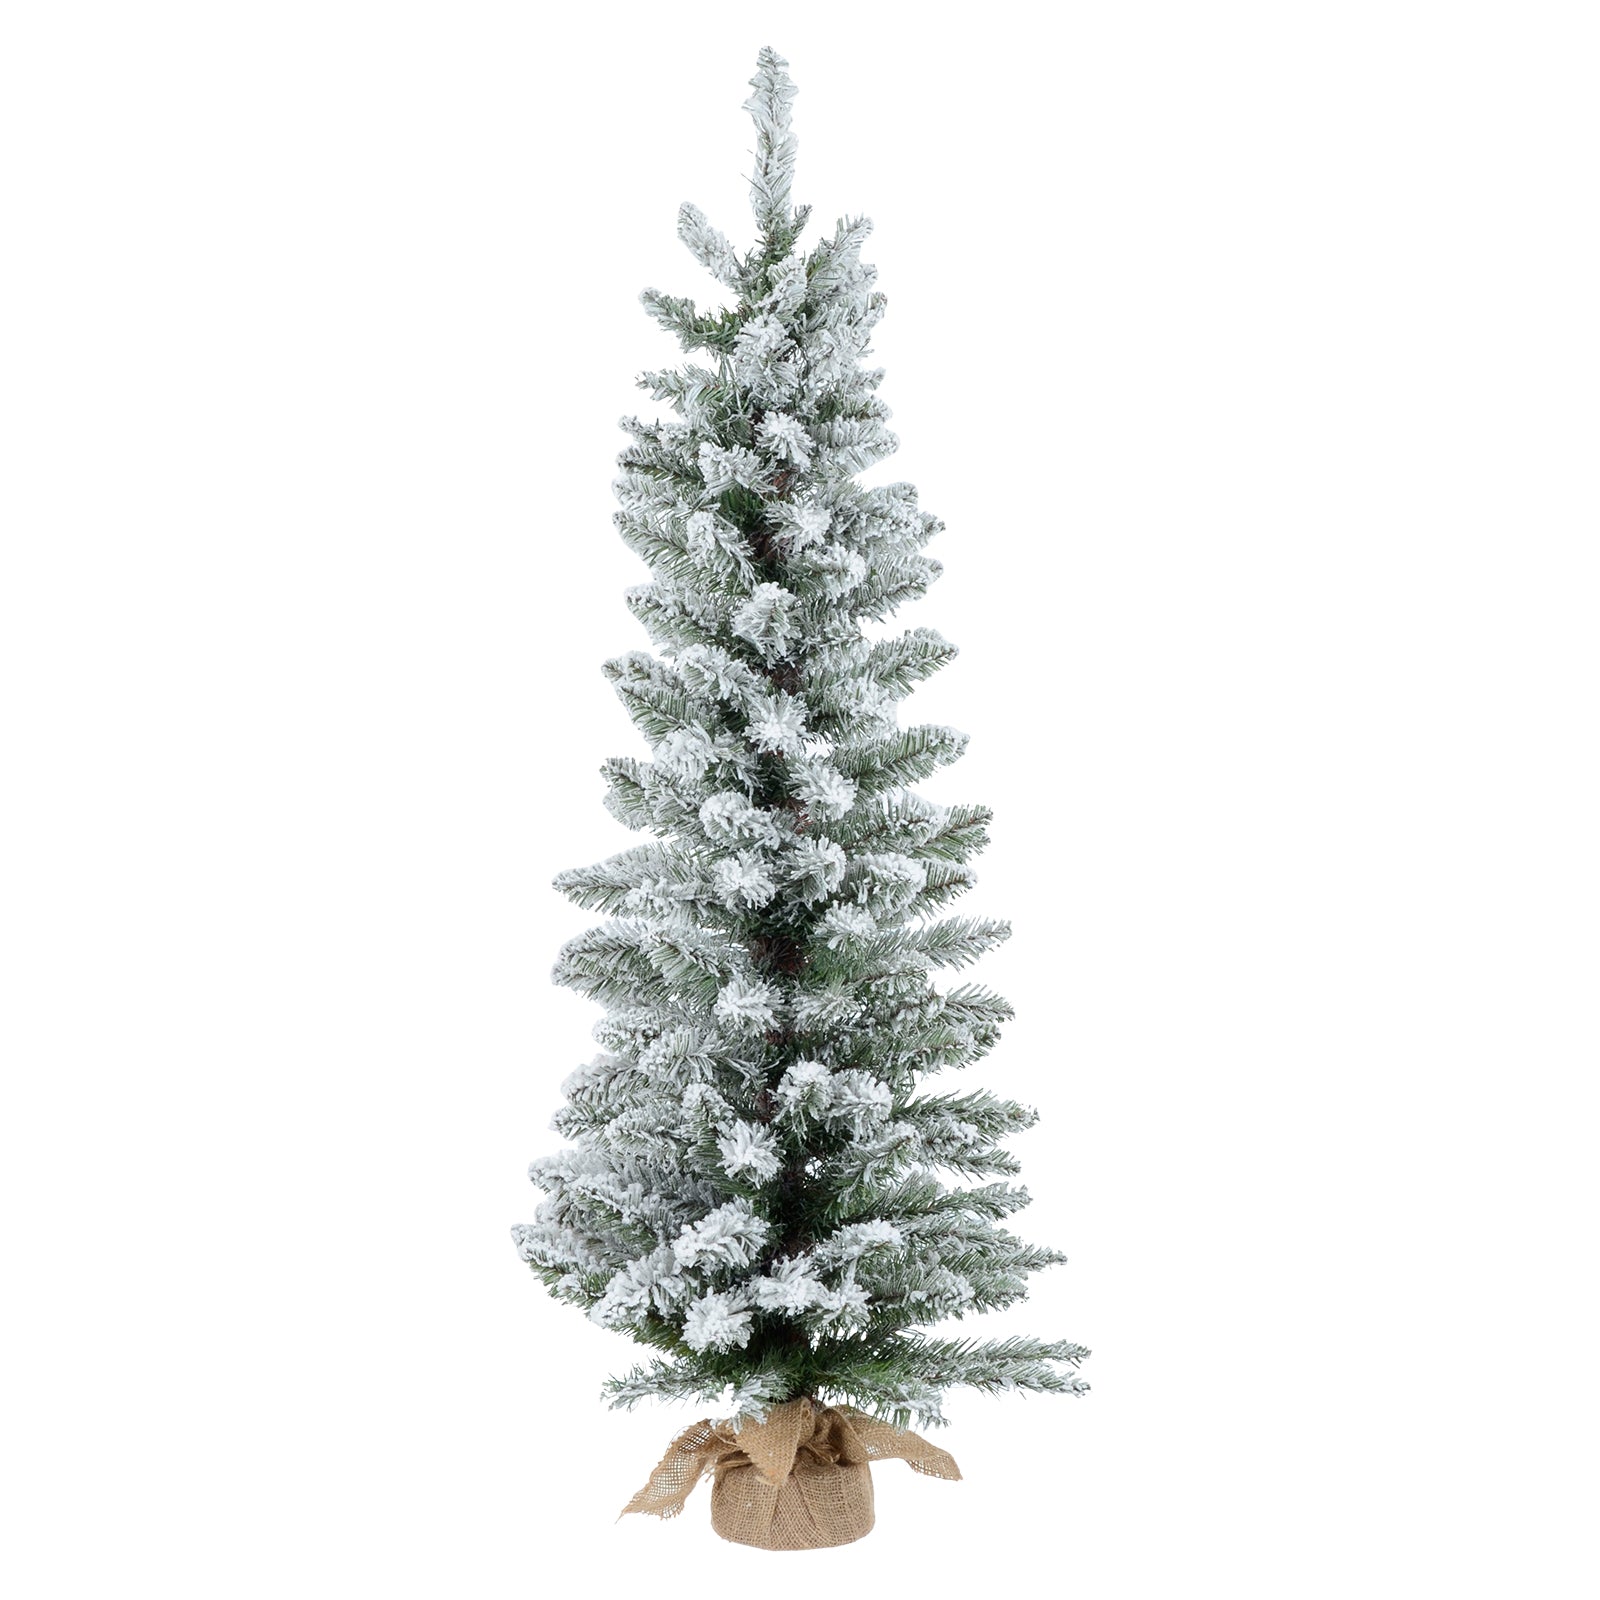 Mr Crimbo 3ft 4ft 5ft Flocked Pencil Christmas Tree Jute Base - MrCrimbo.co.uk -XS6437 - 4ft -3ft tree